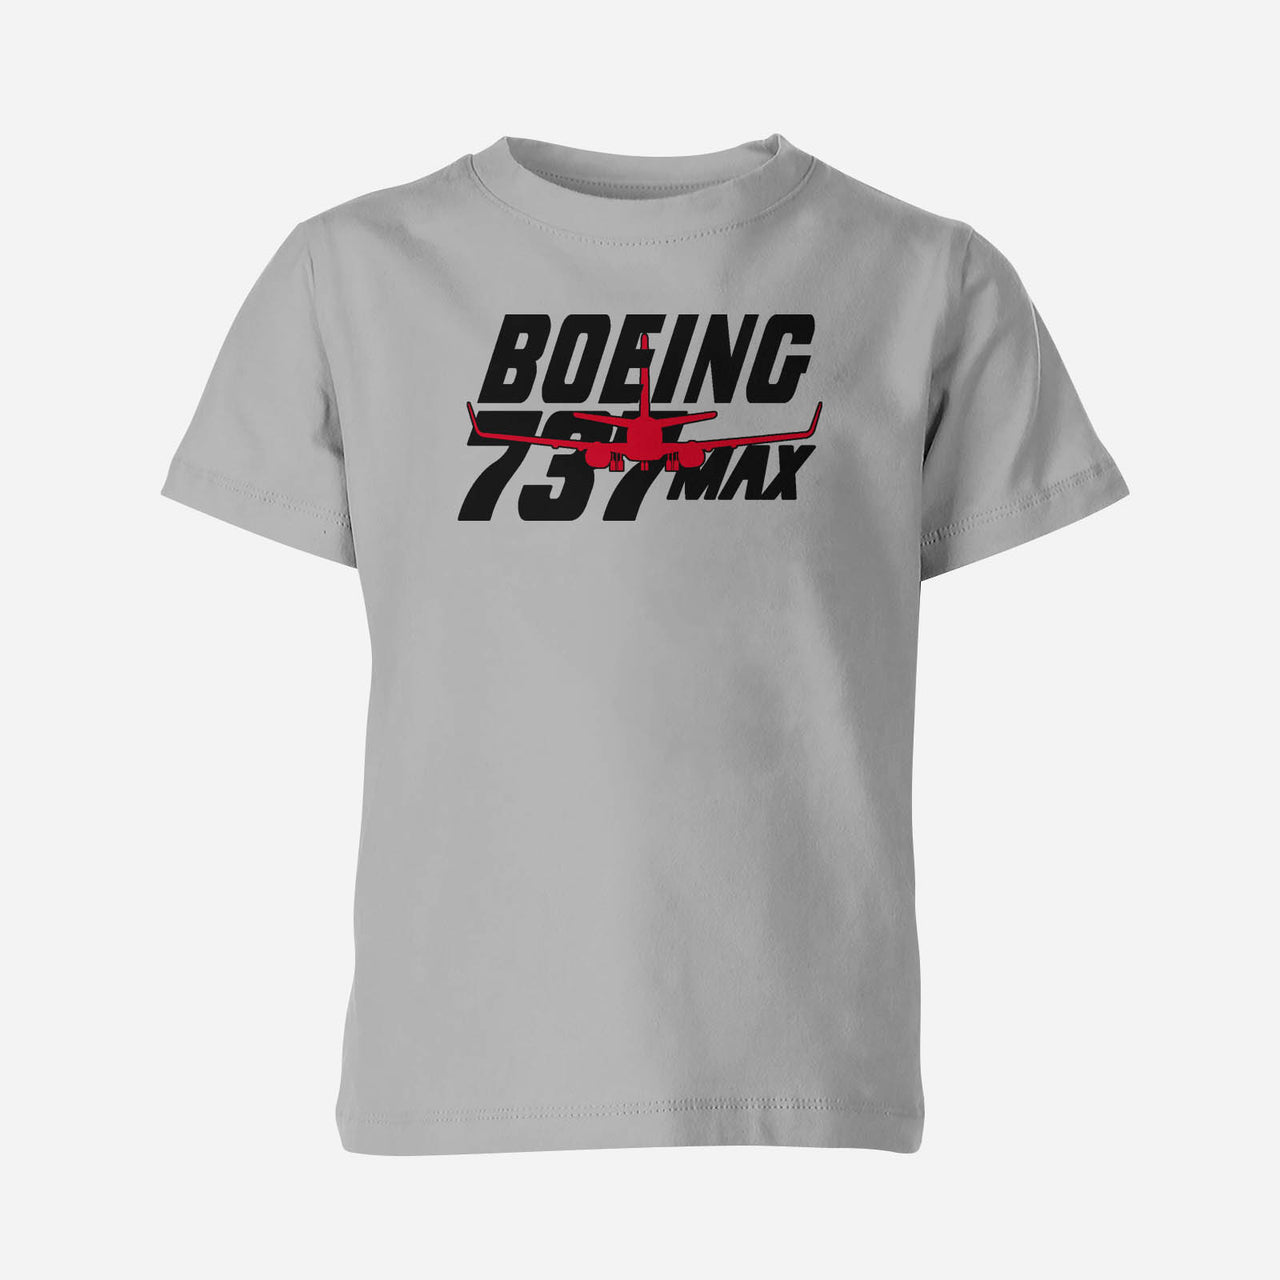 Amazing Boeing 737 Max Designed Children T-Shirts